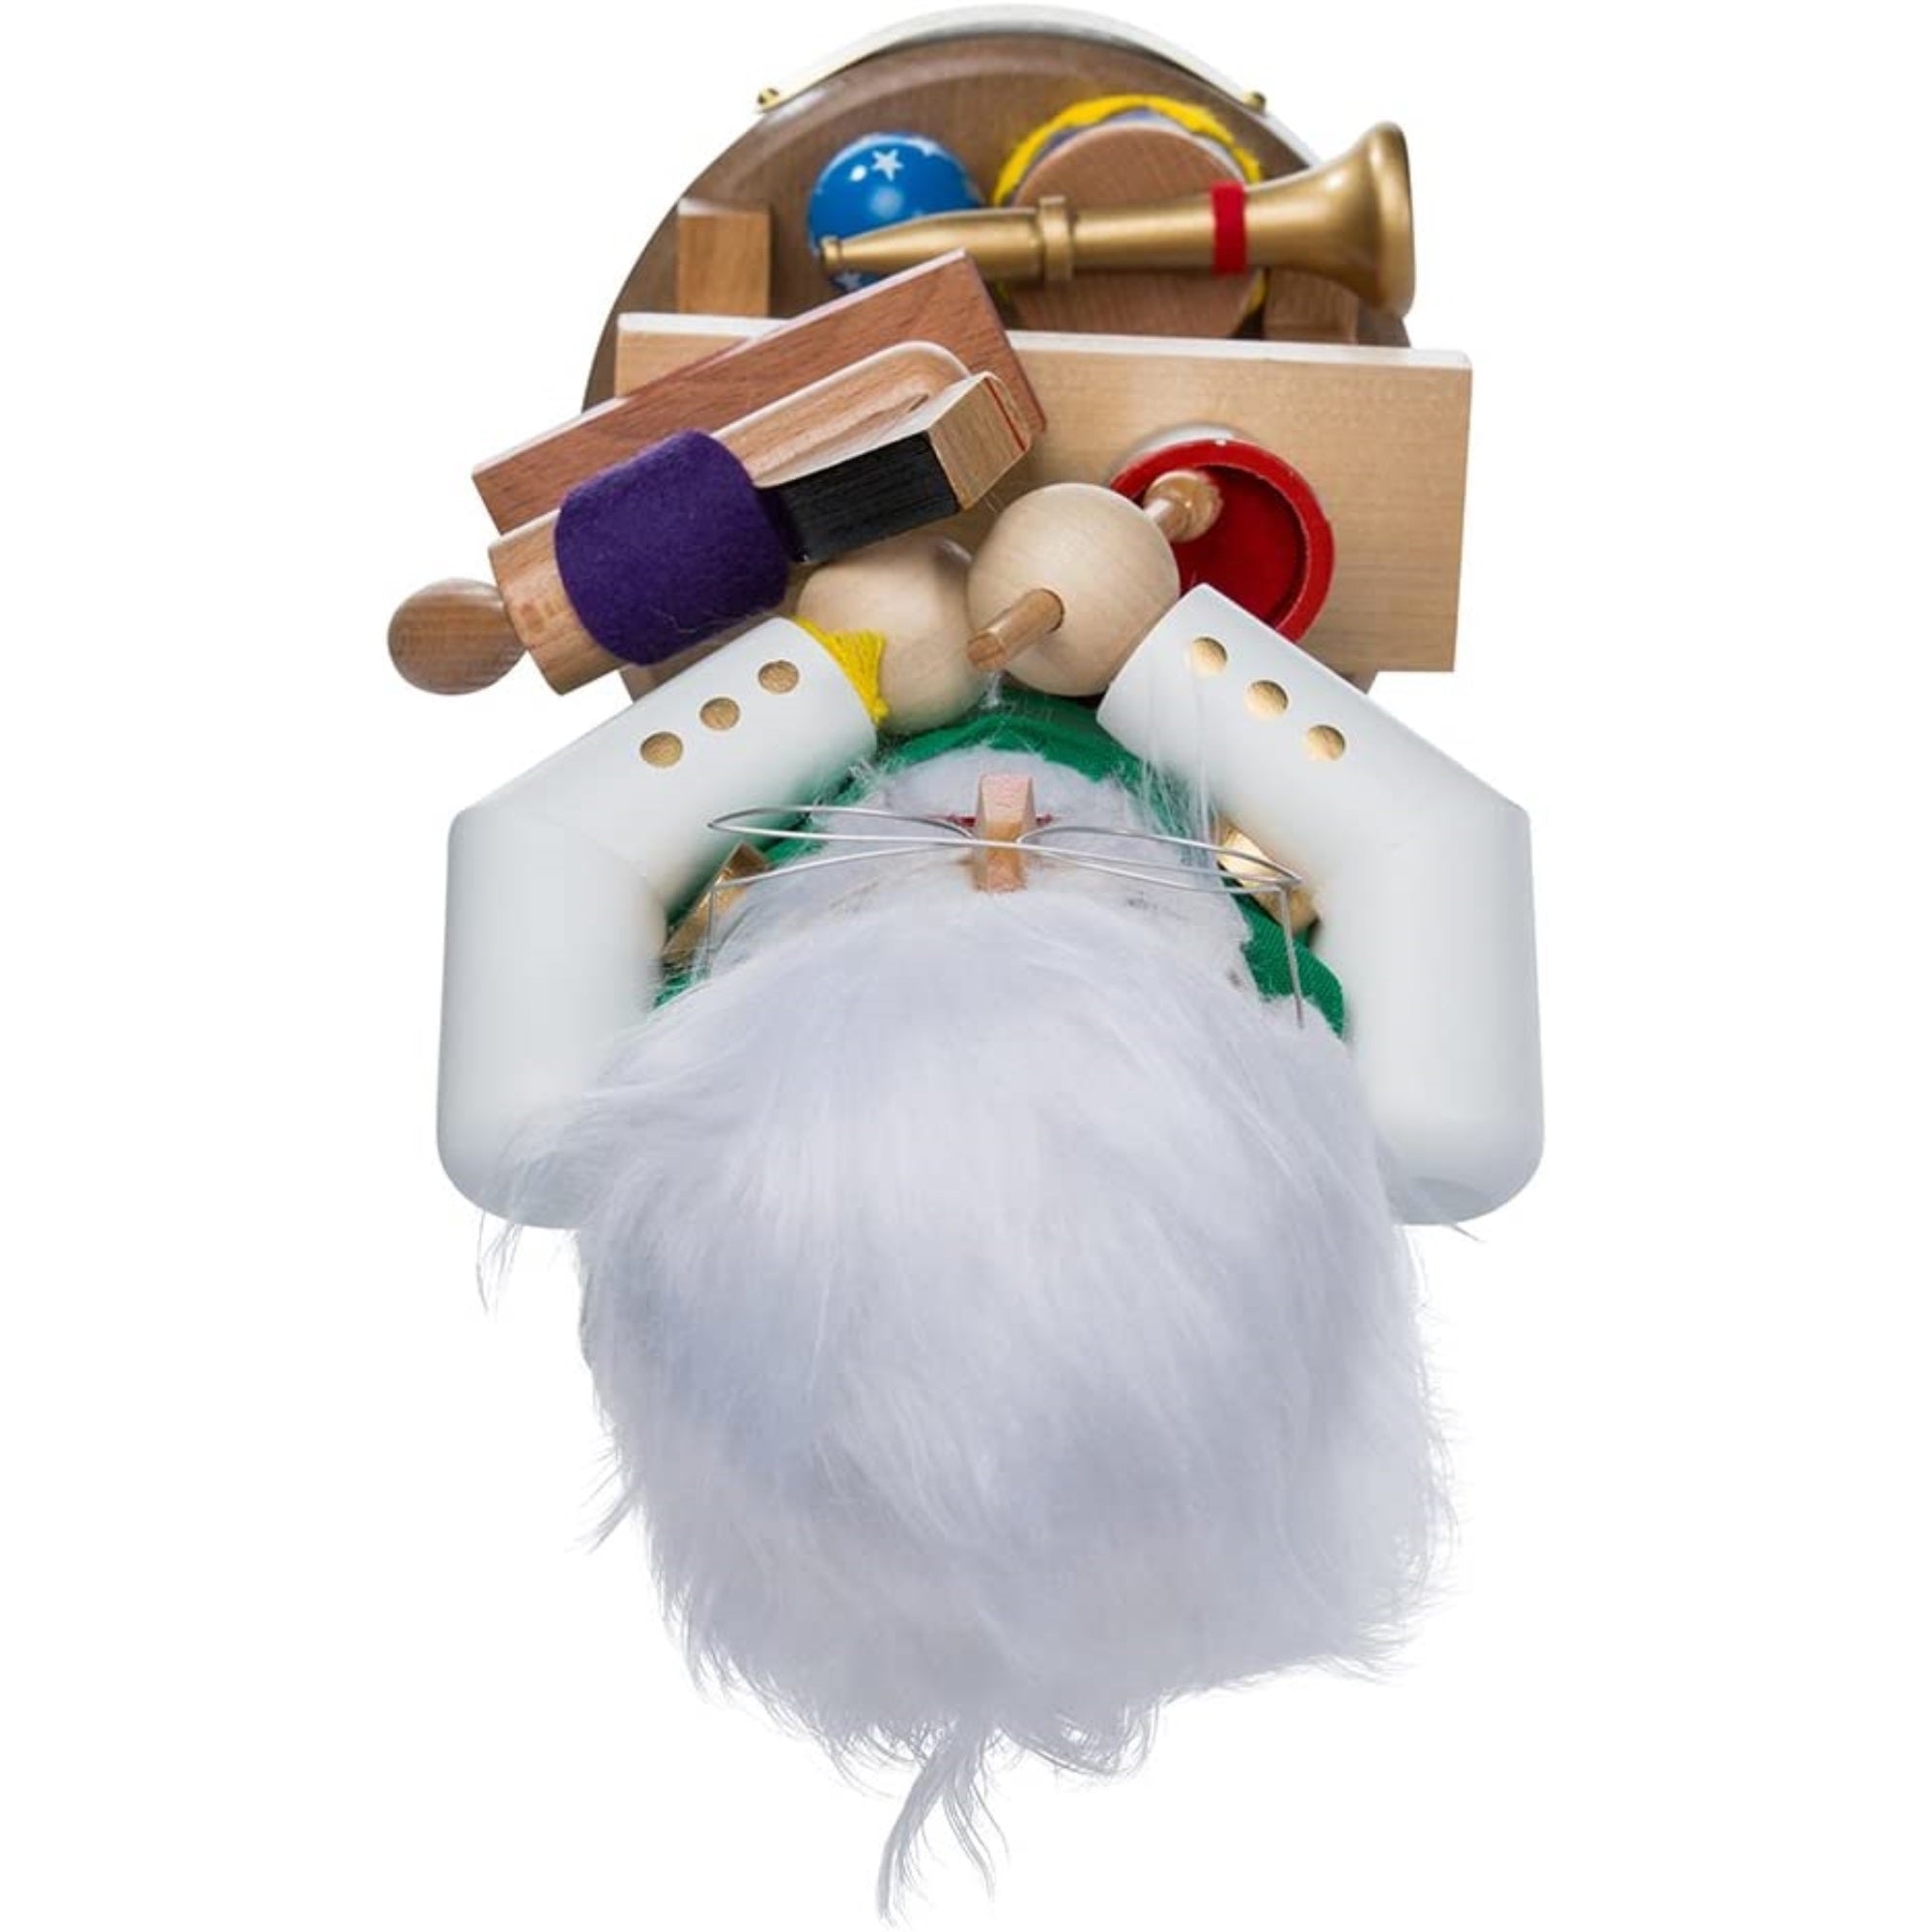 Kurt Adler North Pole Toymaker Santa Christmas Nutcracker, 17"